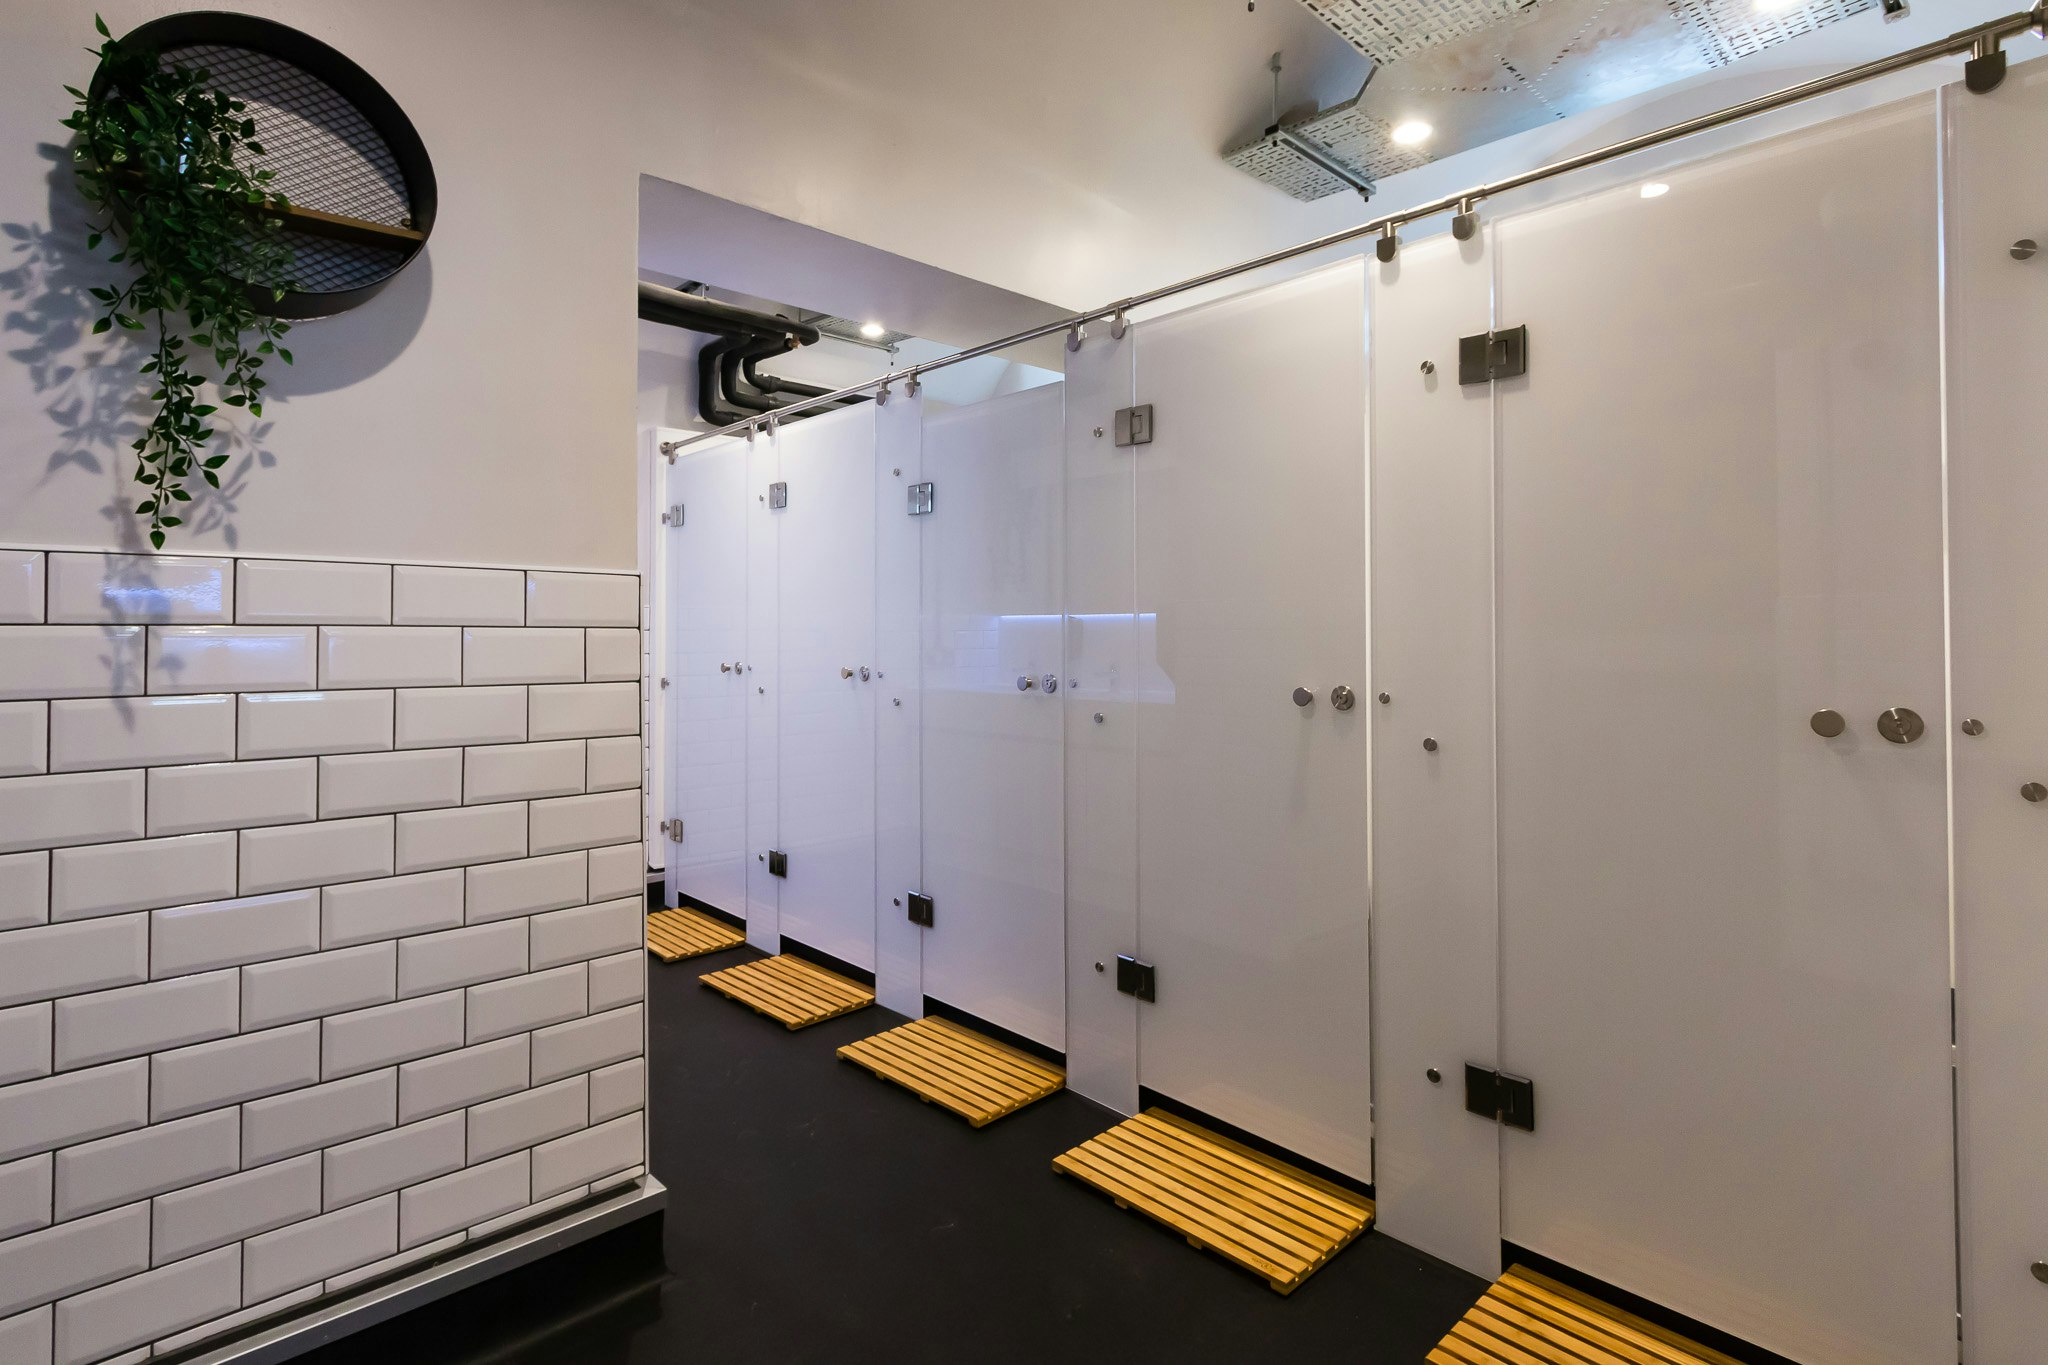 Locker room-style shared bathroom